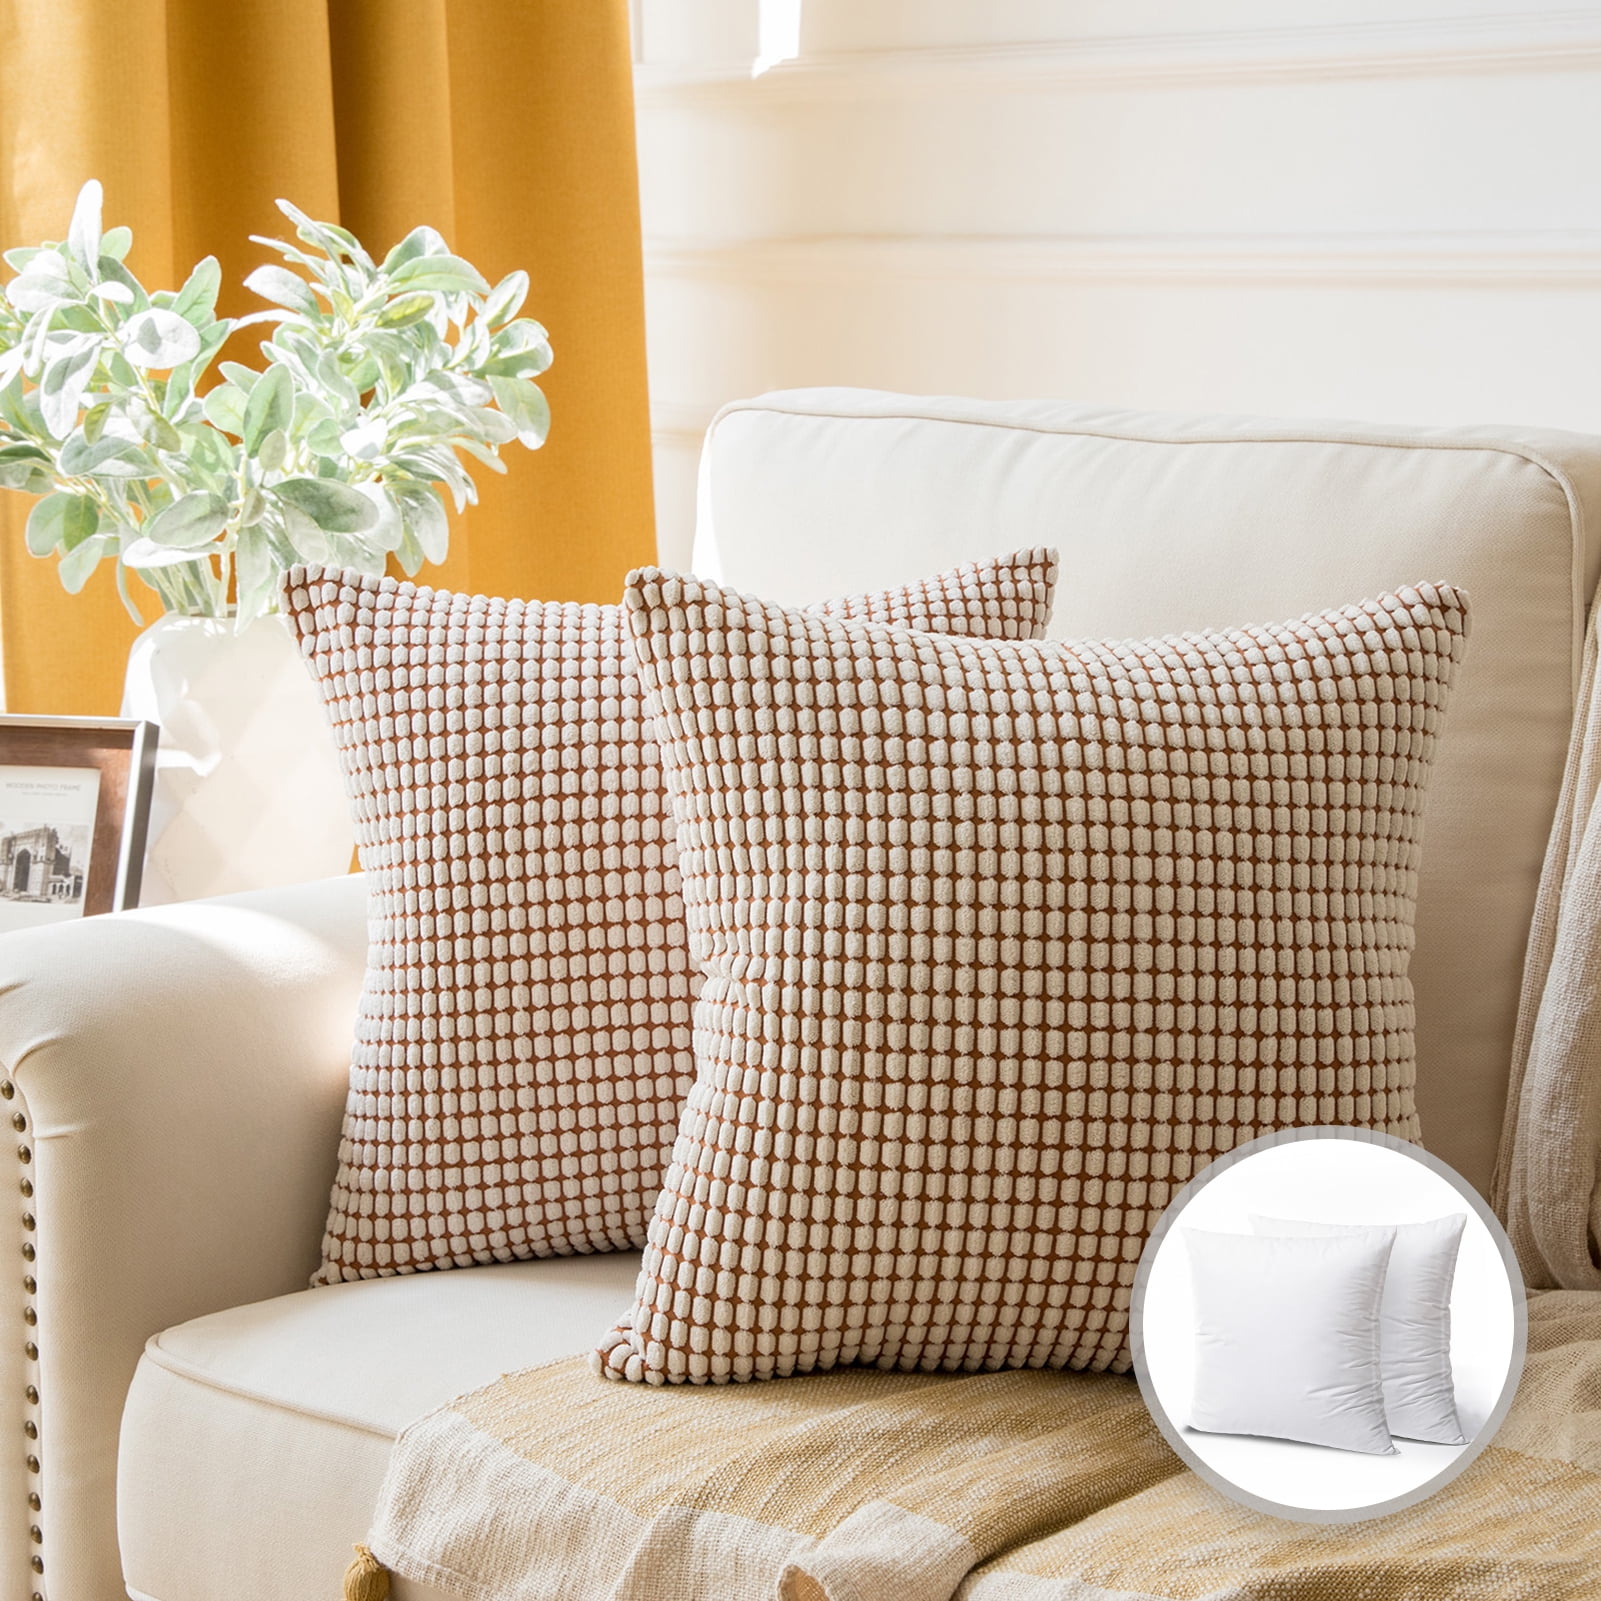 Soft Corduroy Corn Striped Velvet Series Decorative Throw Pillow, 18 inch x 18 inch, Off White, 2 Pack, Phantoscope